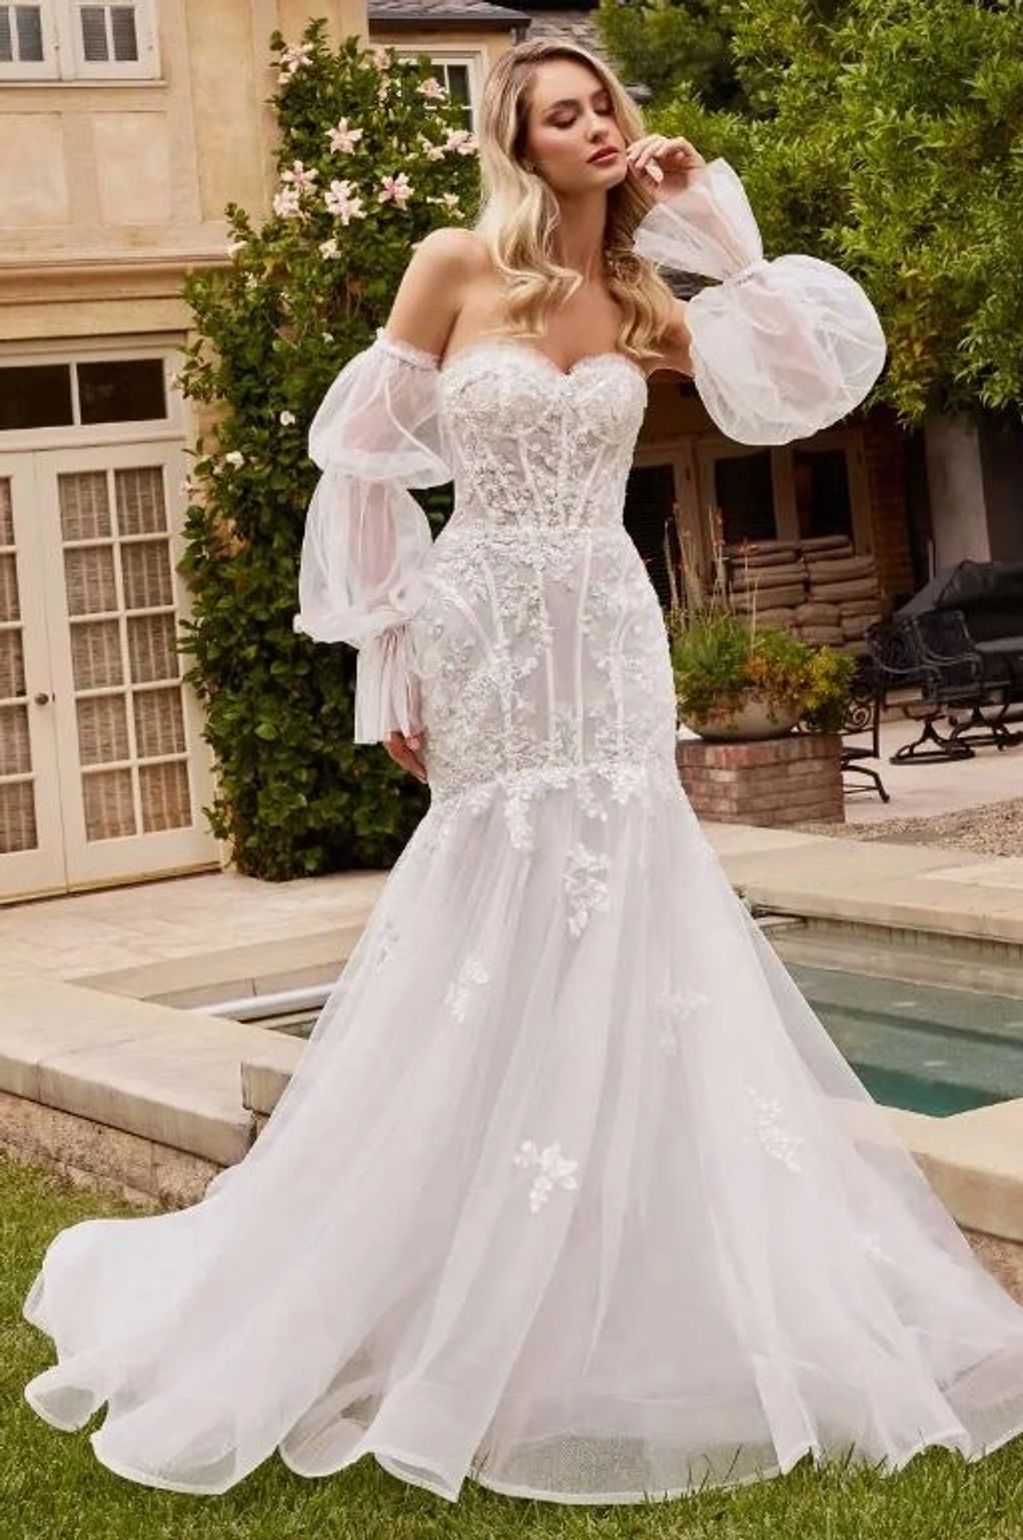 Strapless Mermaid Wedding Dress & Removable Sleeves
$599.00